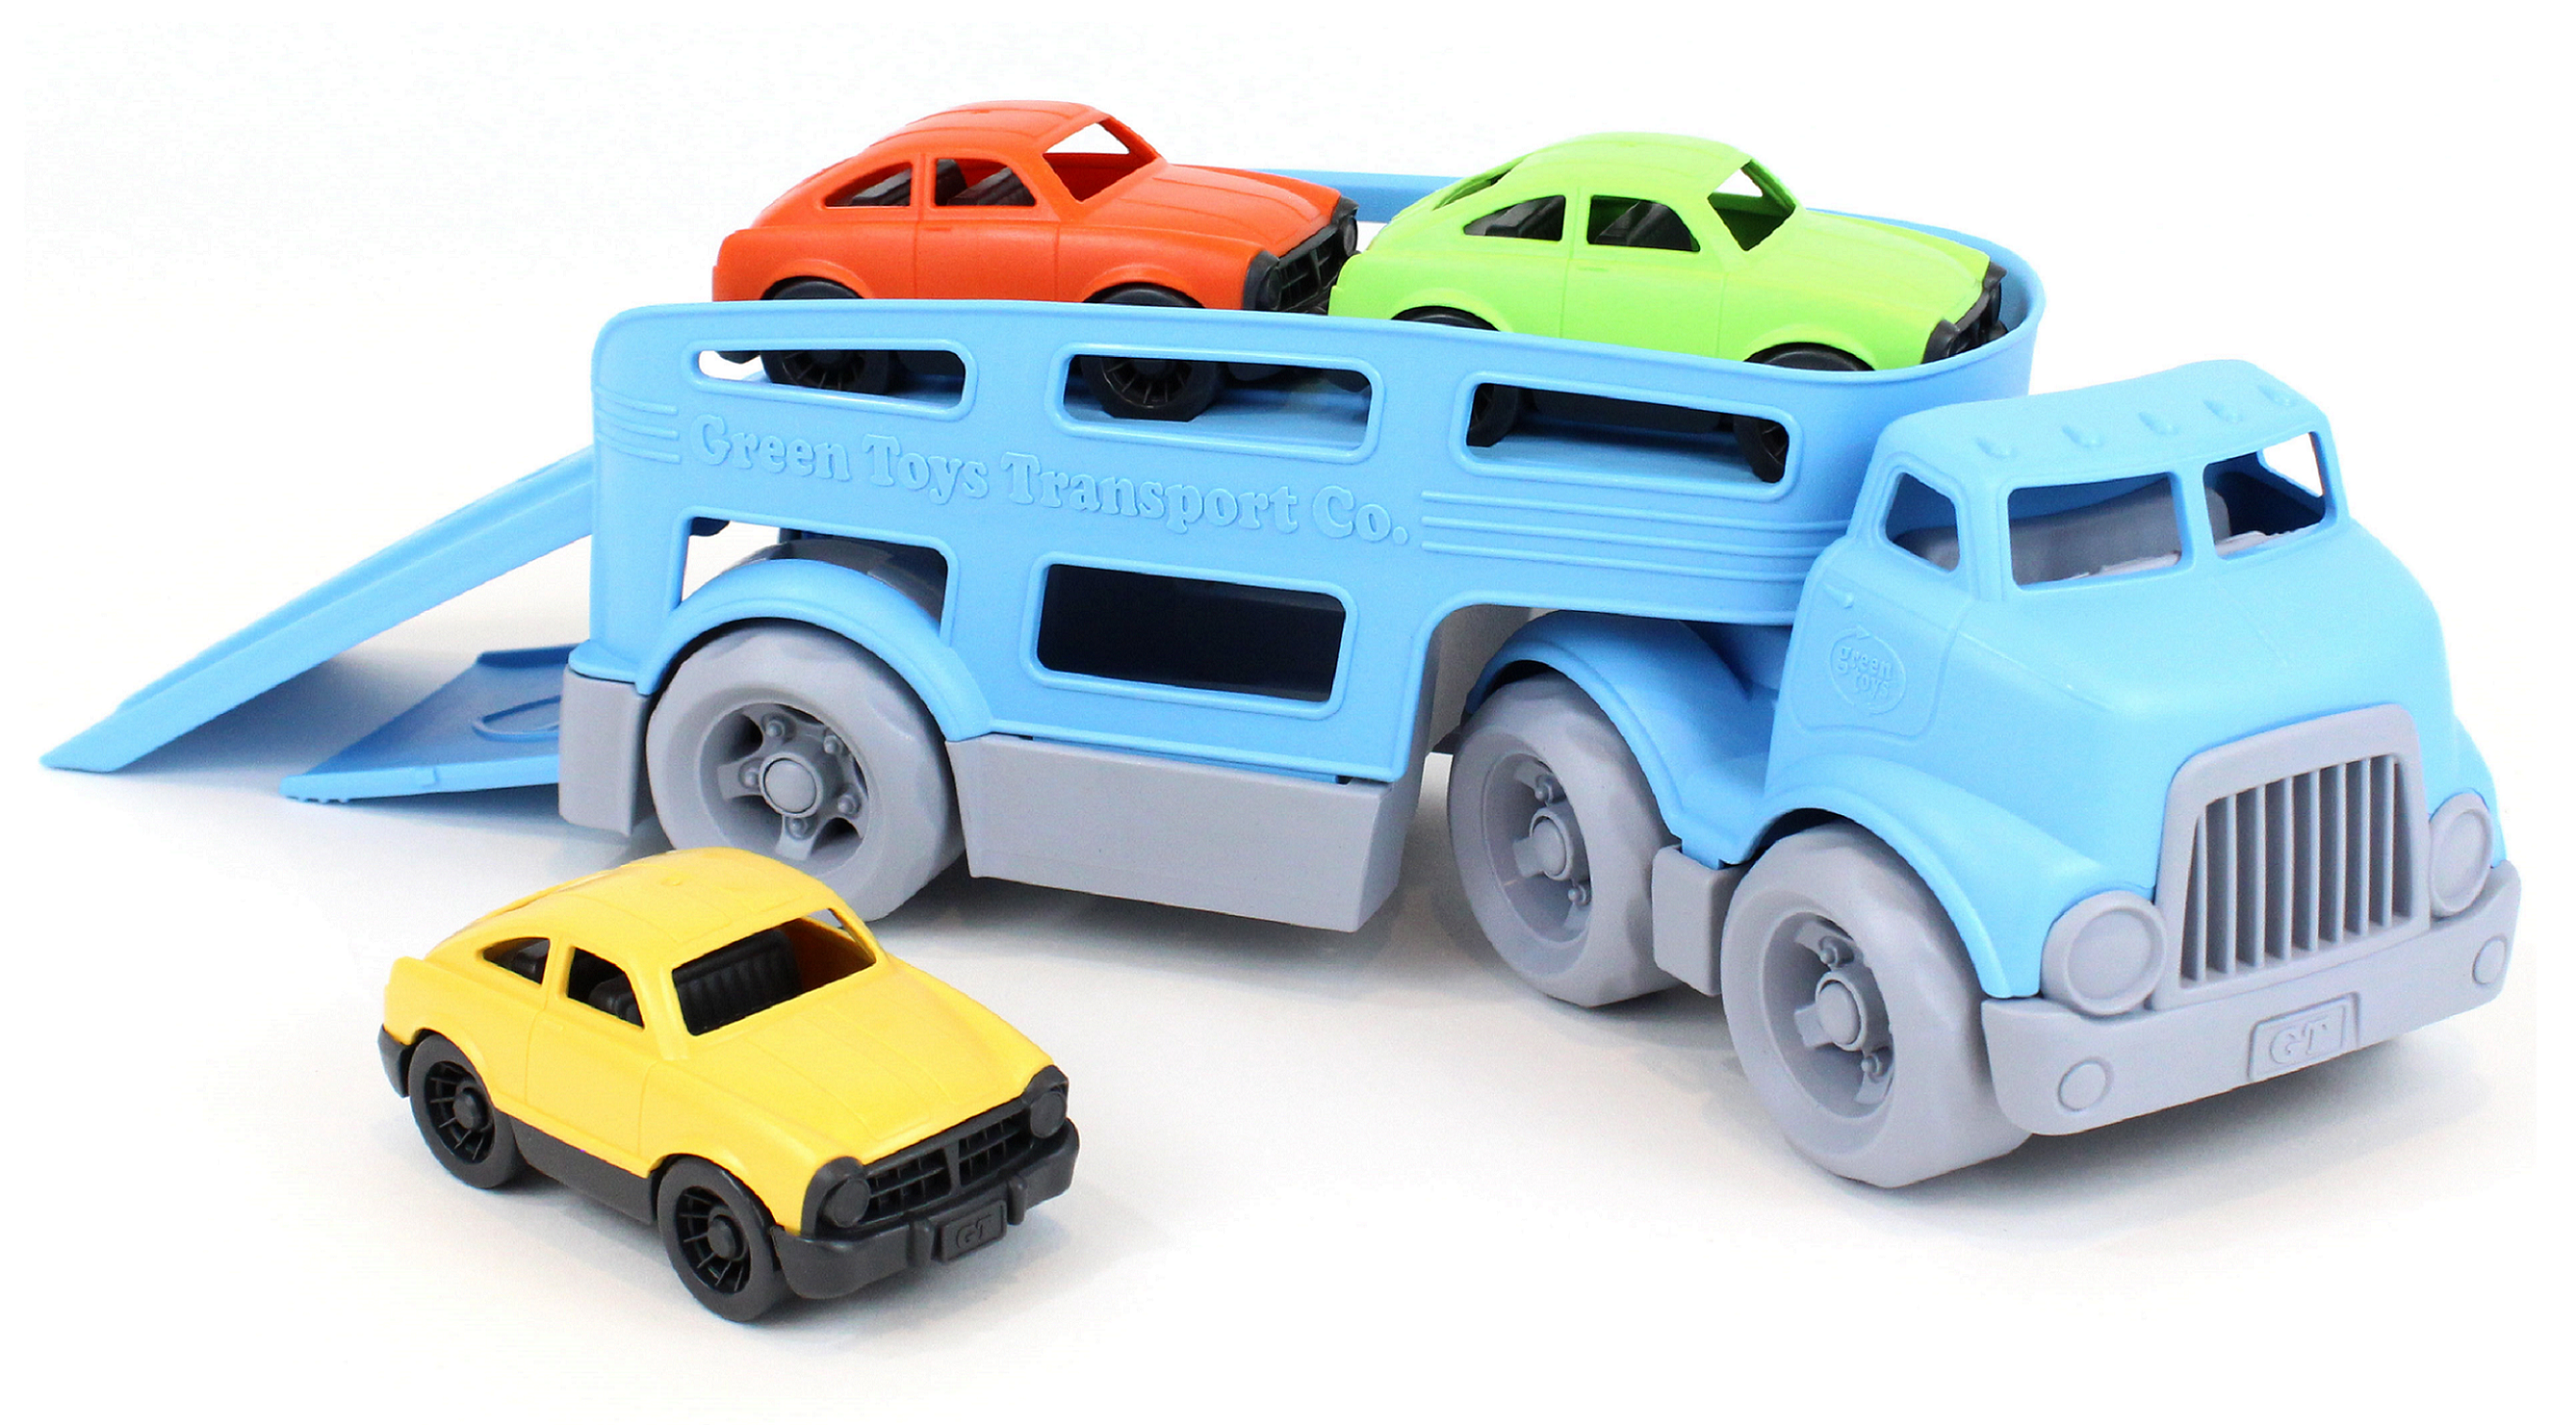 Car Carrier with 3 Mini Cars